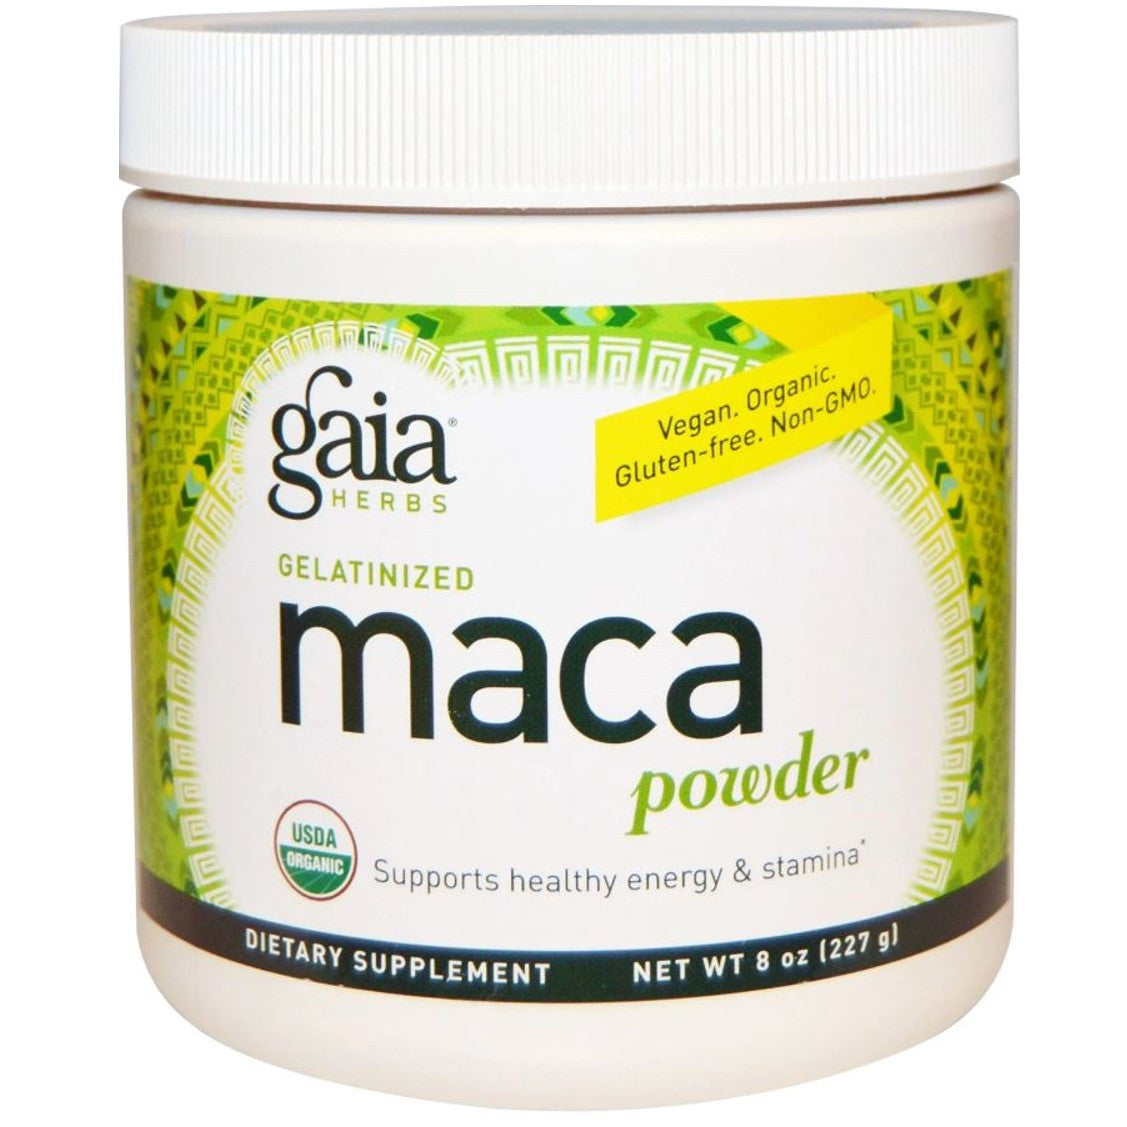 Gaia Herbs Organic Gelatinized Maca Powder, 227g.-NaturesWisdom